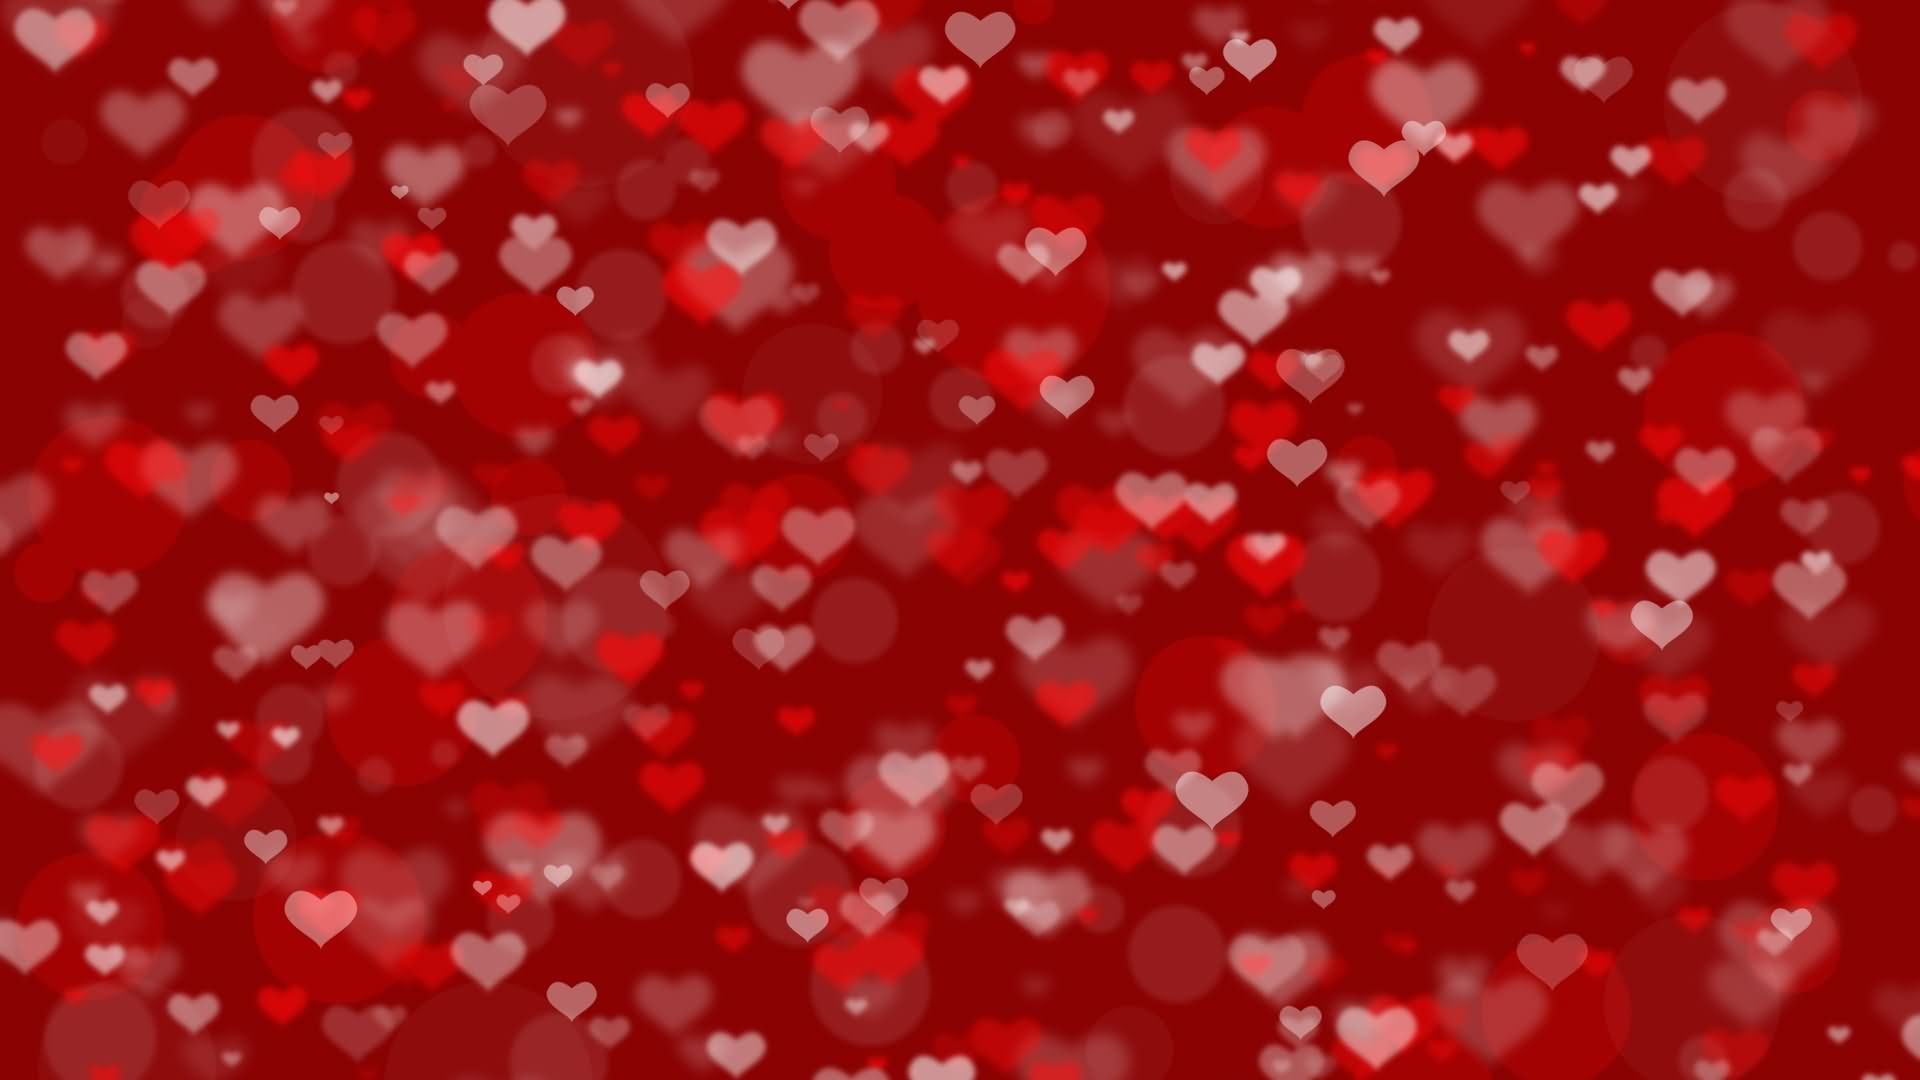 Floating Digital Art Heart Background Image Image